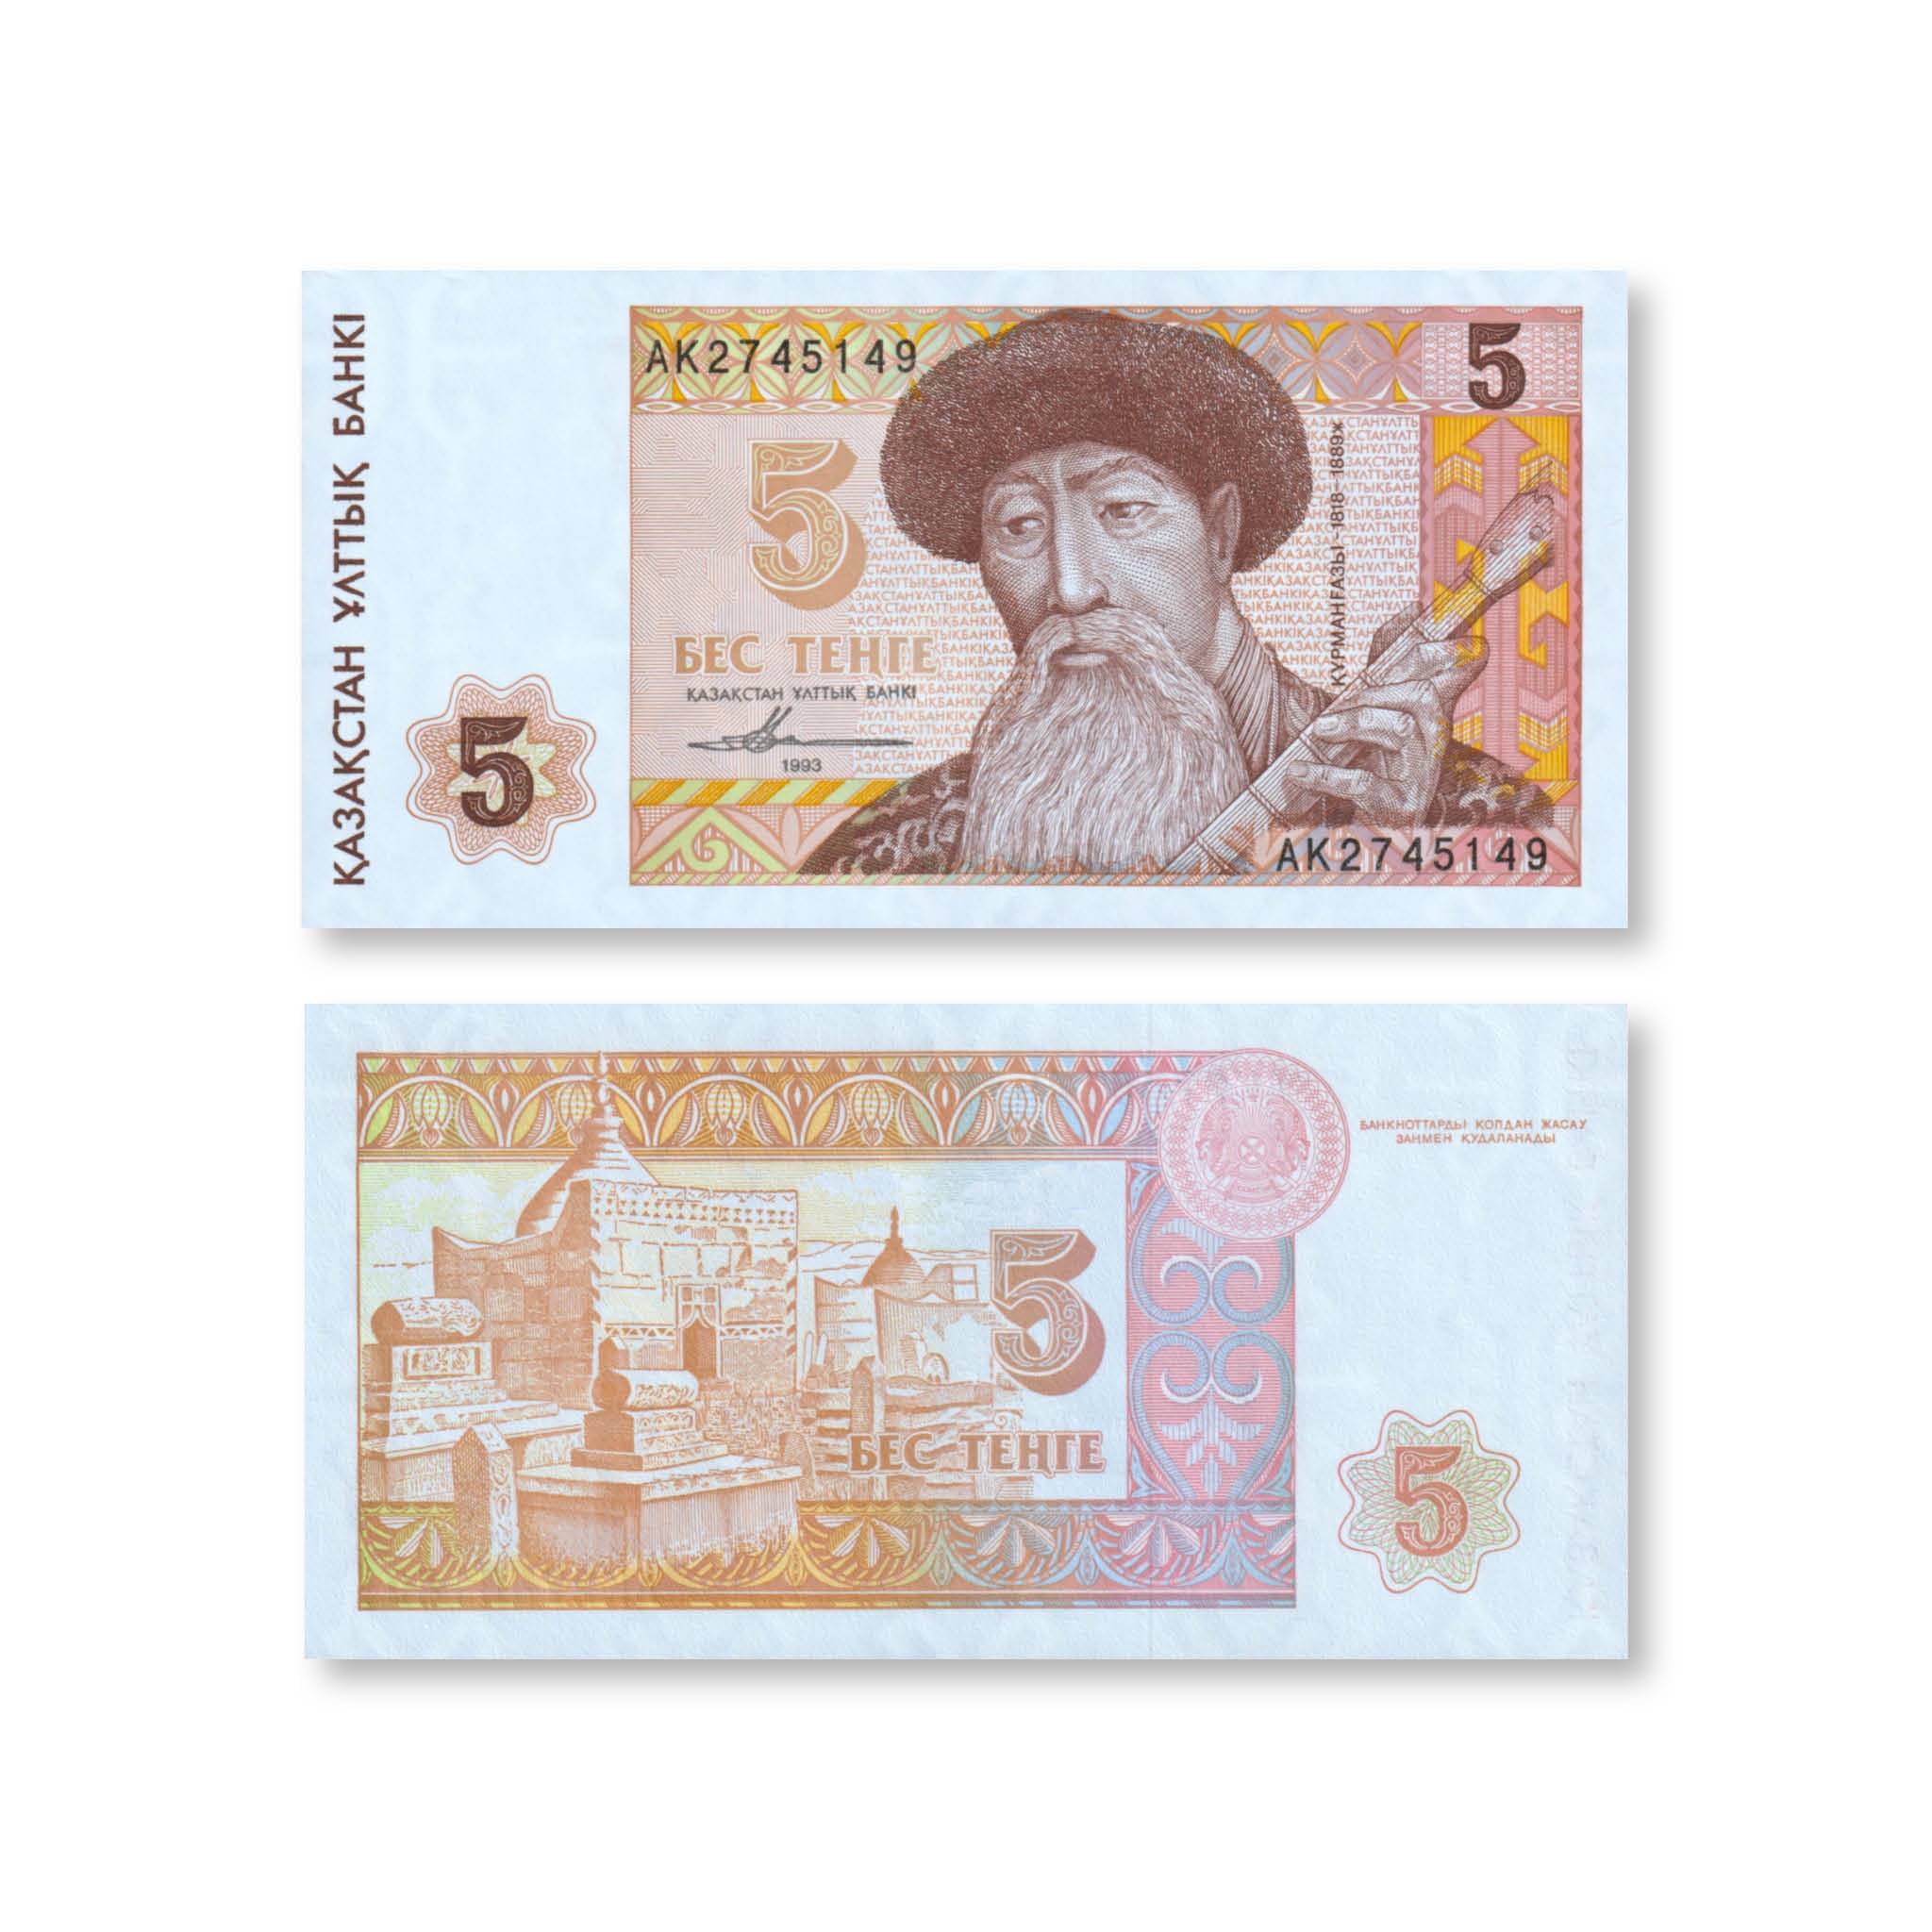 Kazakhstan 5 Tenge, 1993 (1995), B109b, P9a, UNC - Robert's World Money - World Banknotes